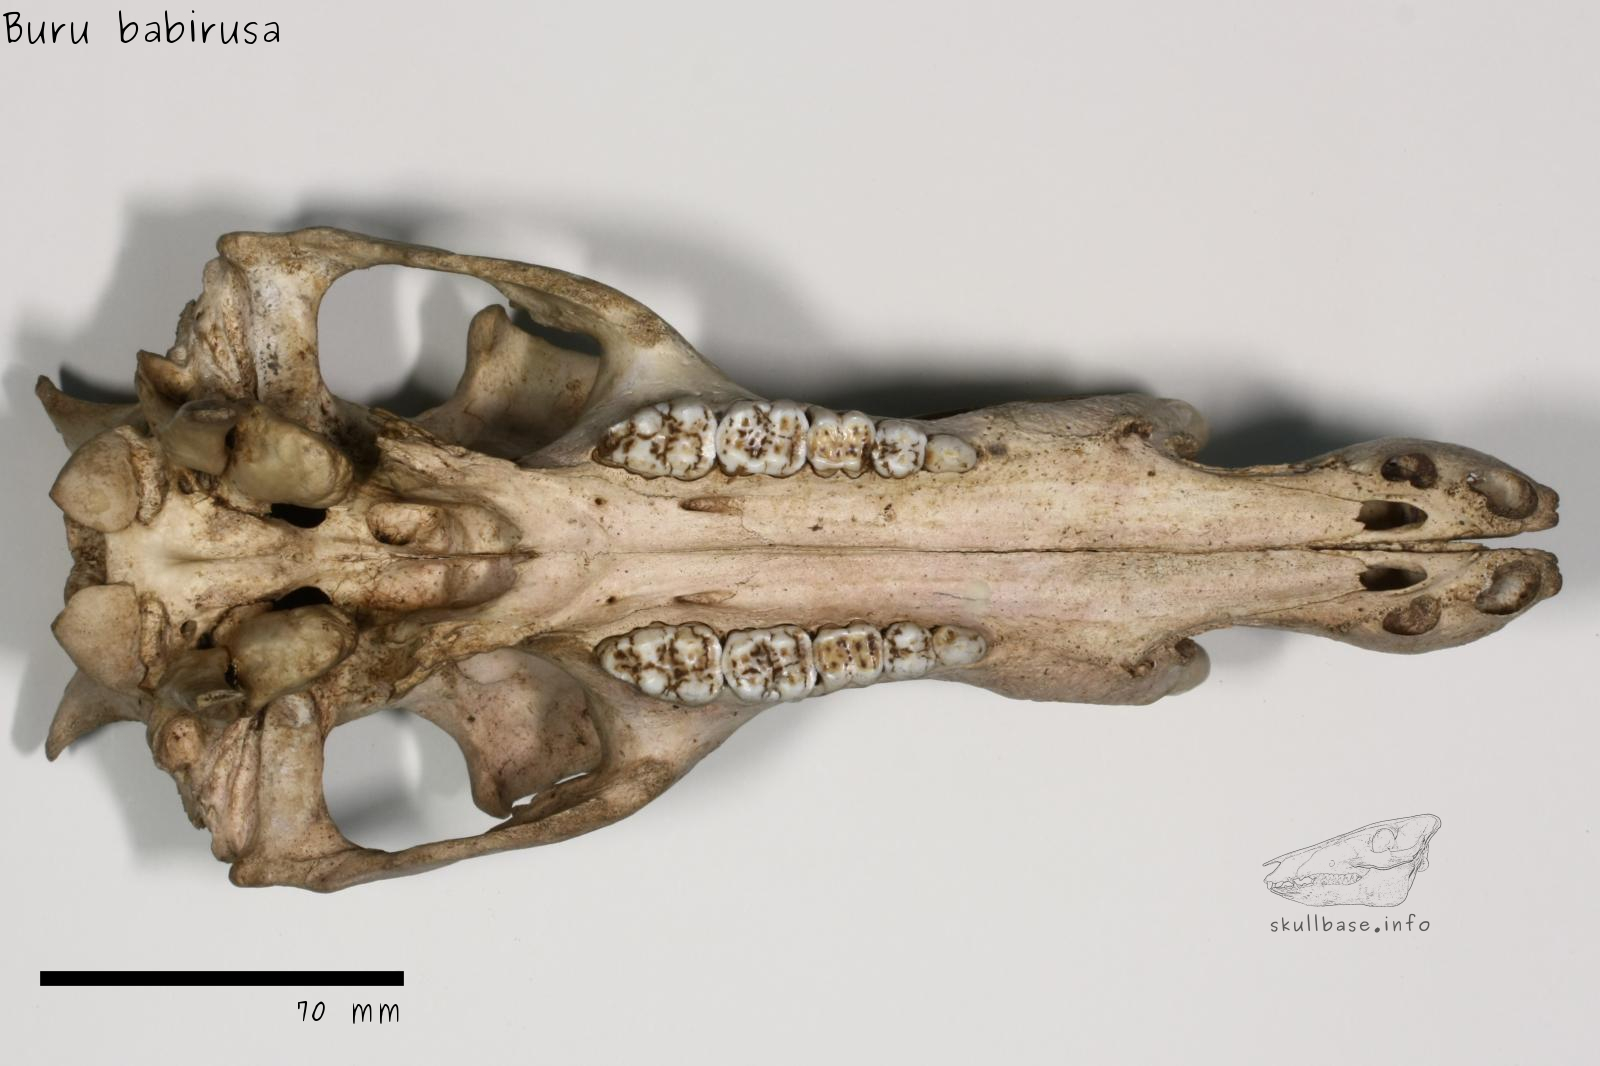 Buru babirusa (Babyrousa babyrussa) skull ventral view